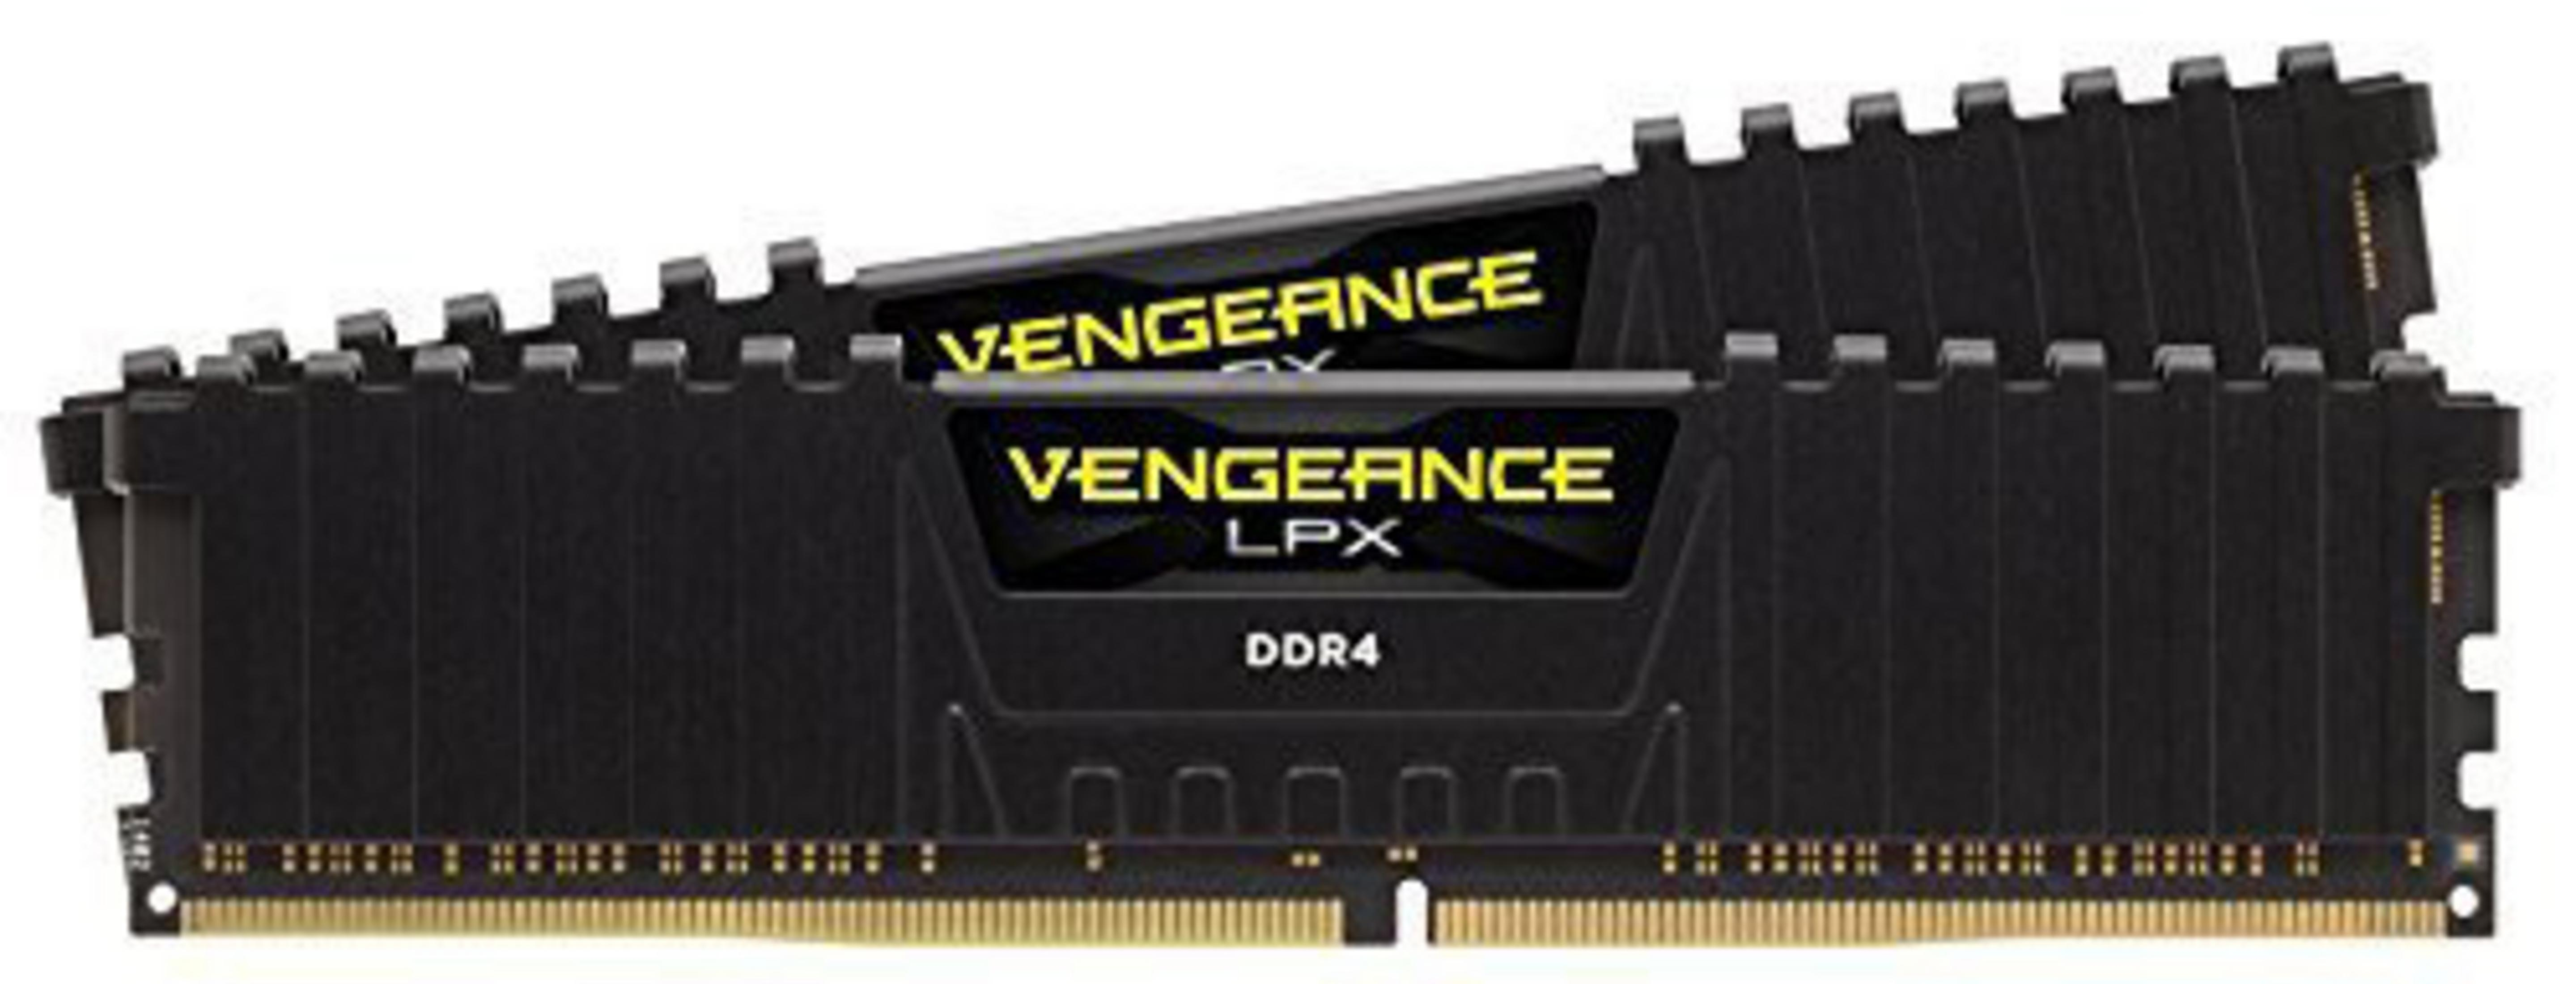 CORSAIR CMK8GX4M1A2666 VENGEANCE DDR4 8GB DDR4 8 DIMM GB Arbeitsspeicher LPX 288 PIN